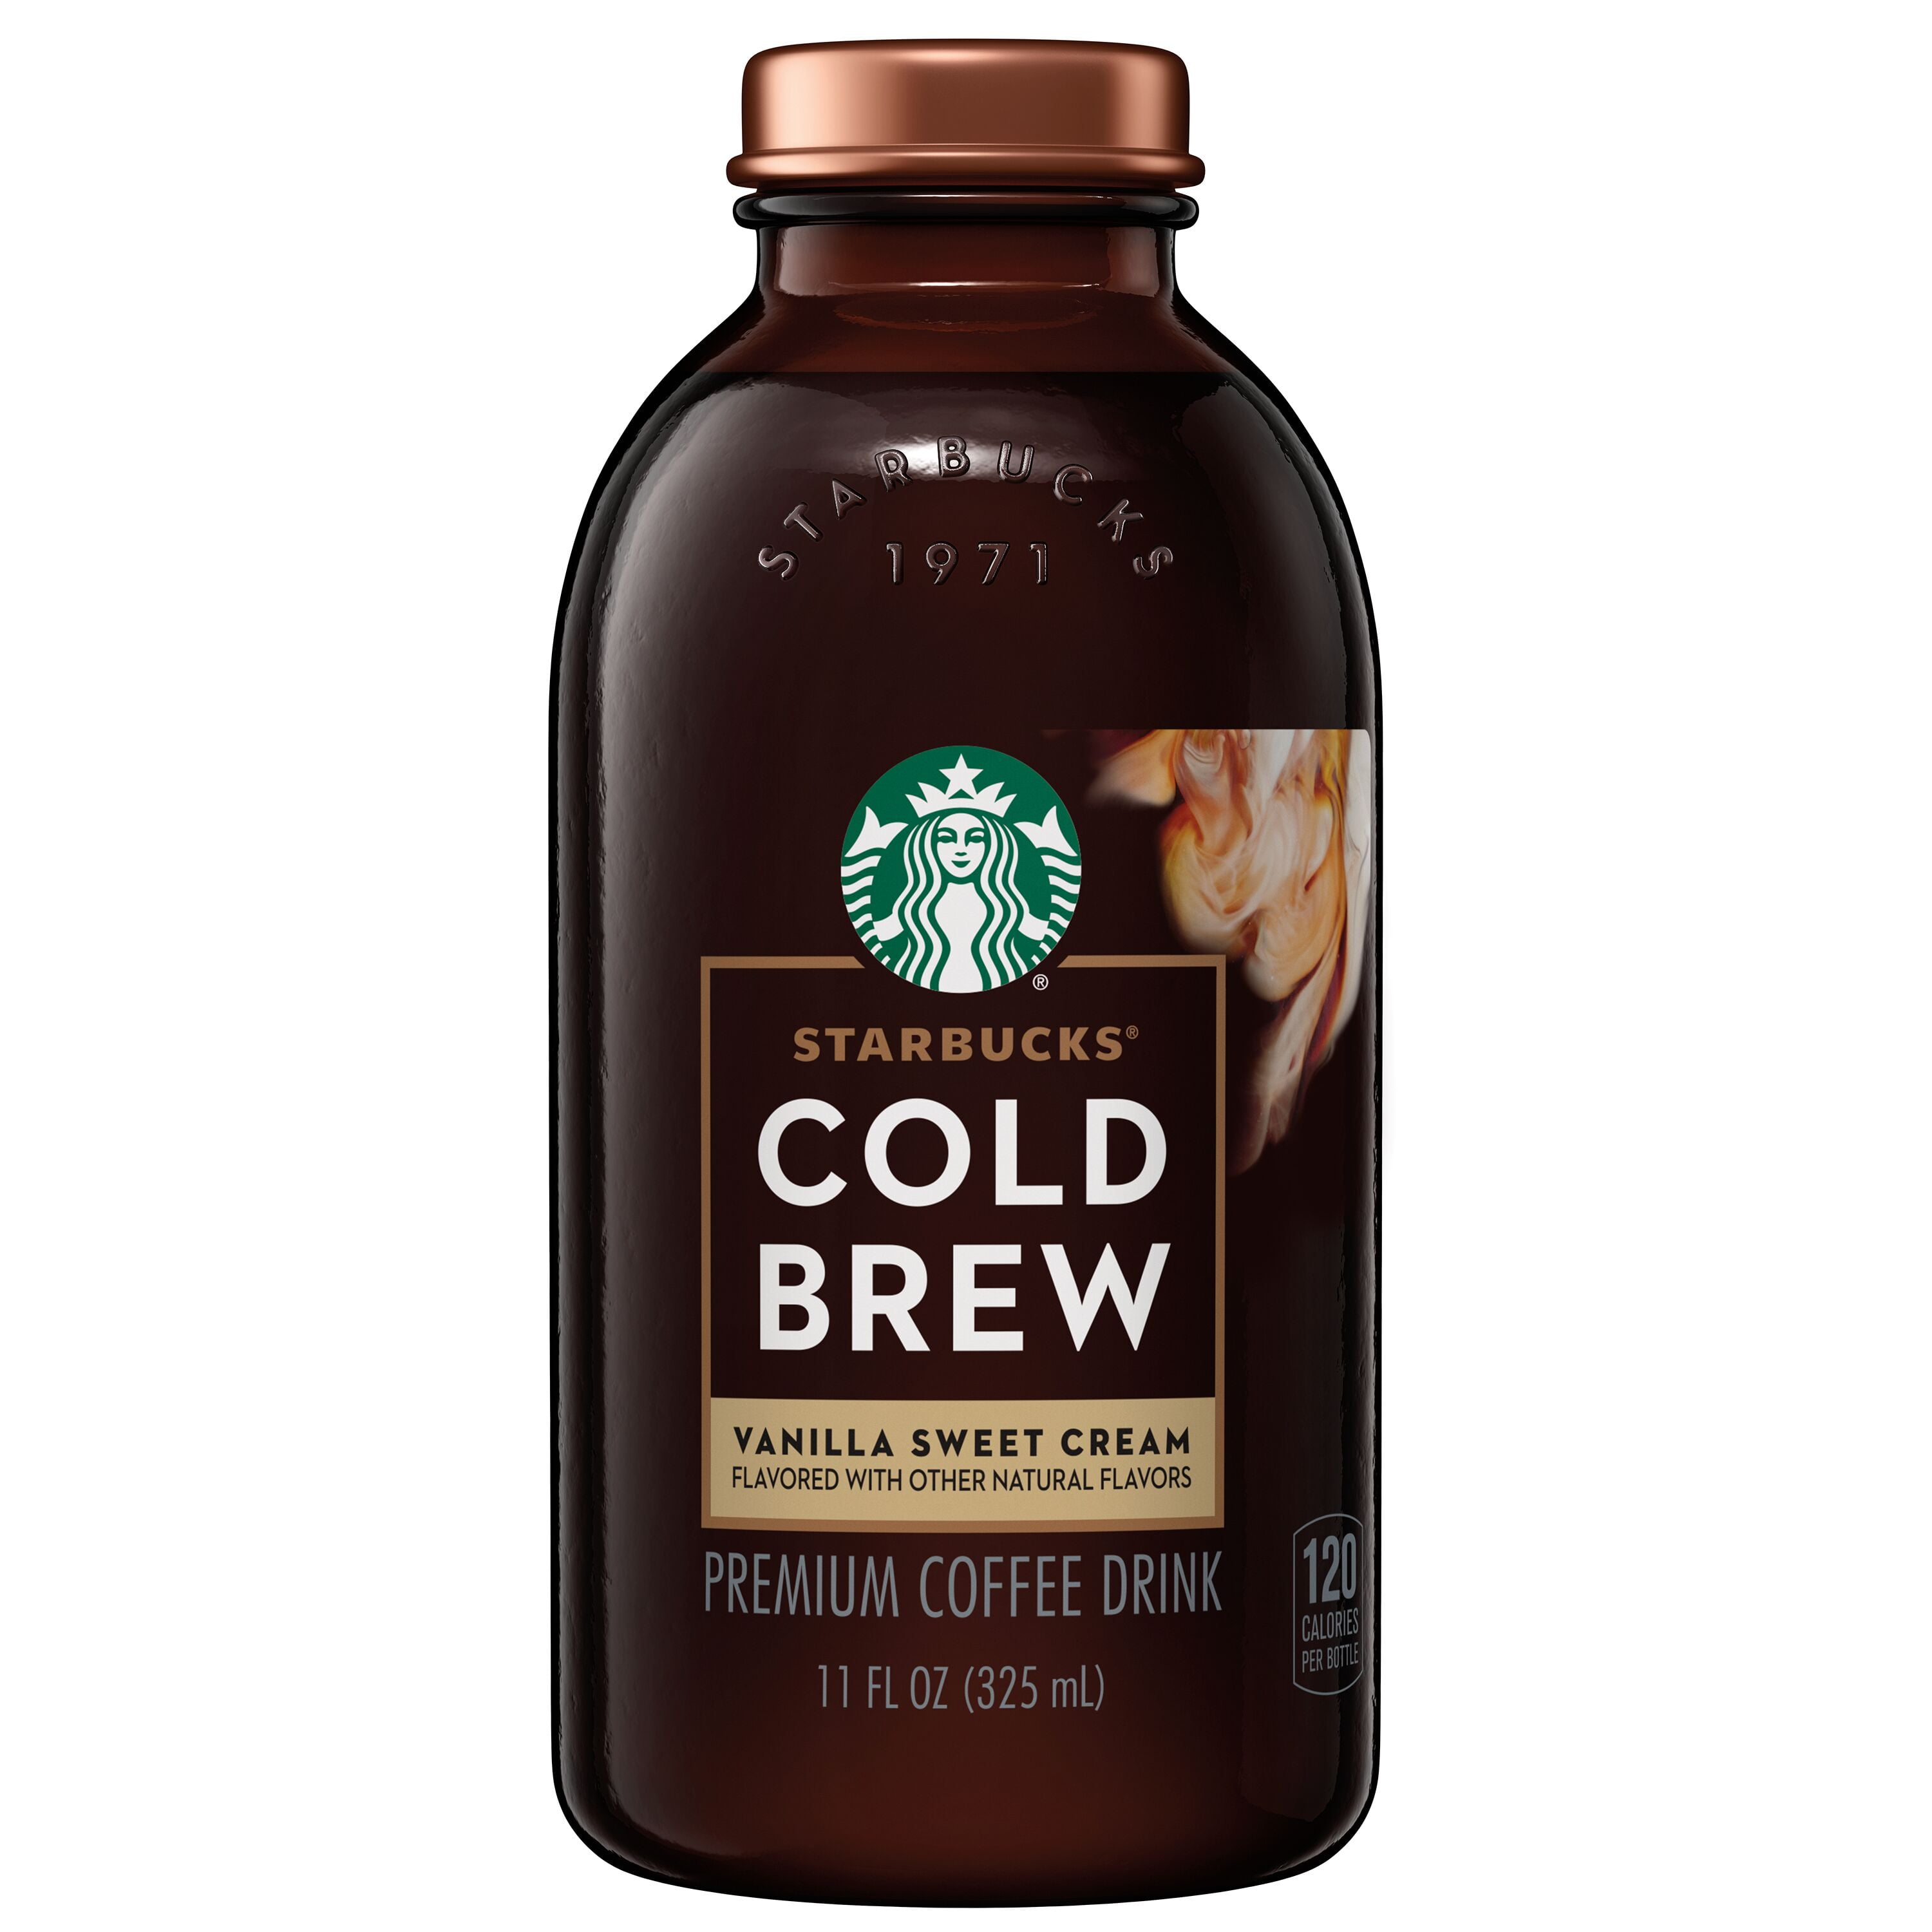 Starbucks Cold Brew Vanilla Sweet Cream Premium Coffee, 11 oz Glass Bottle